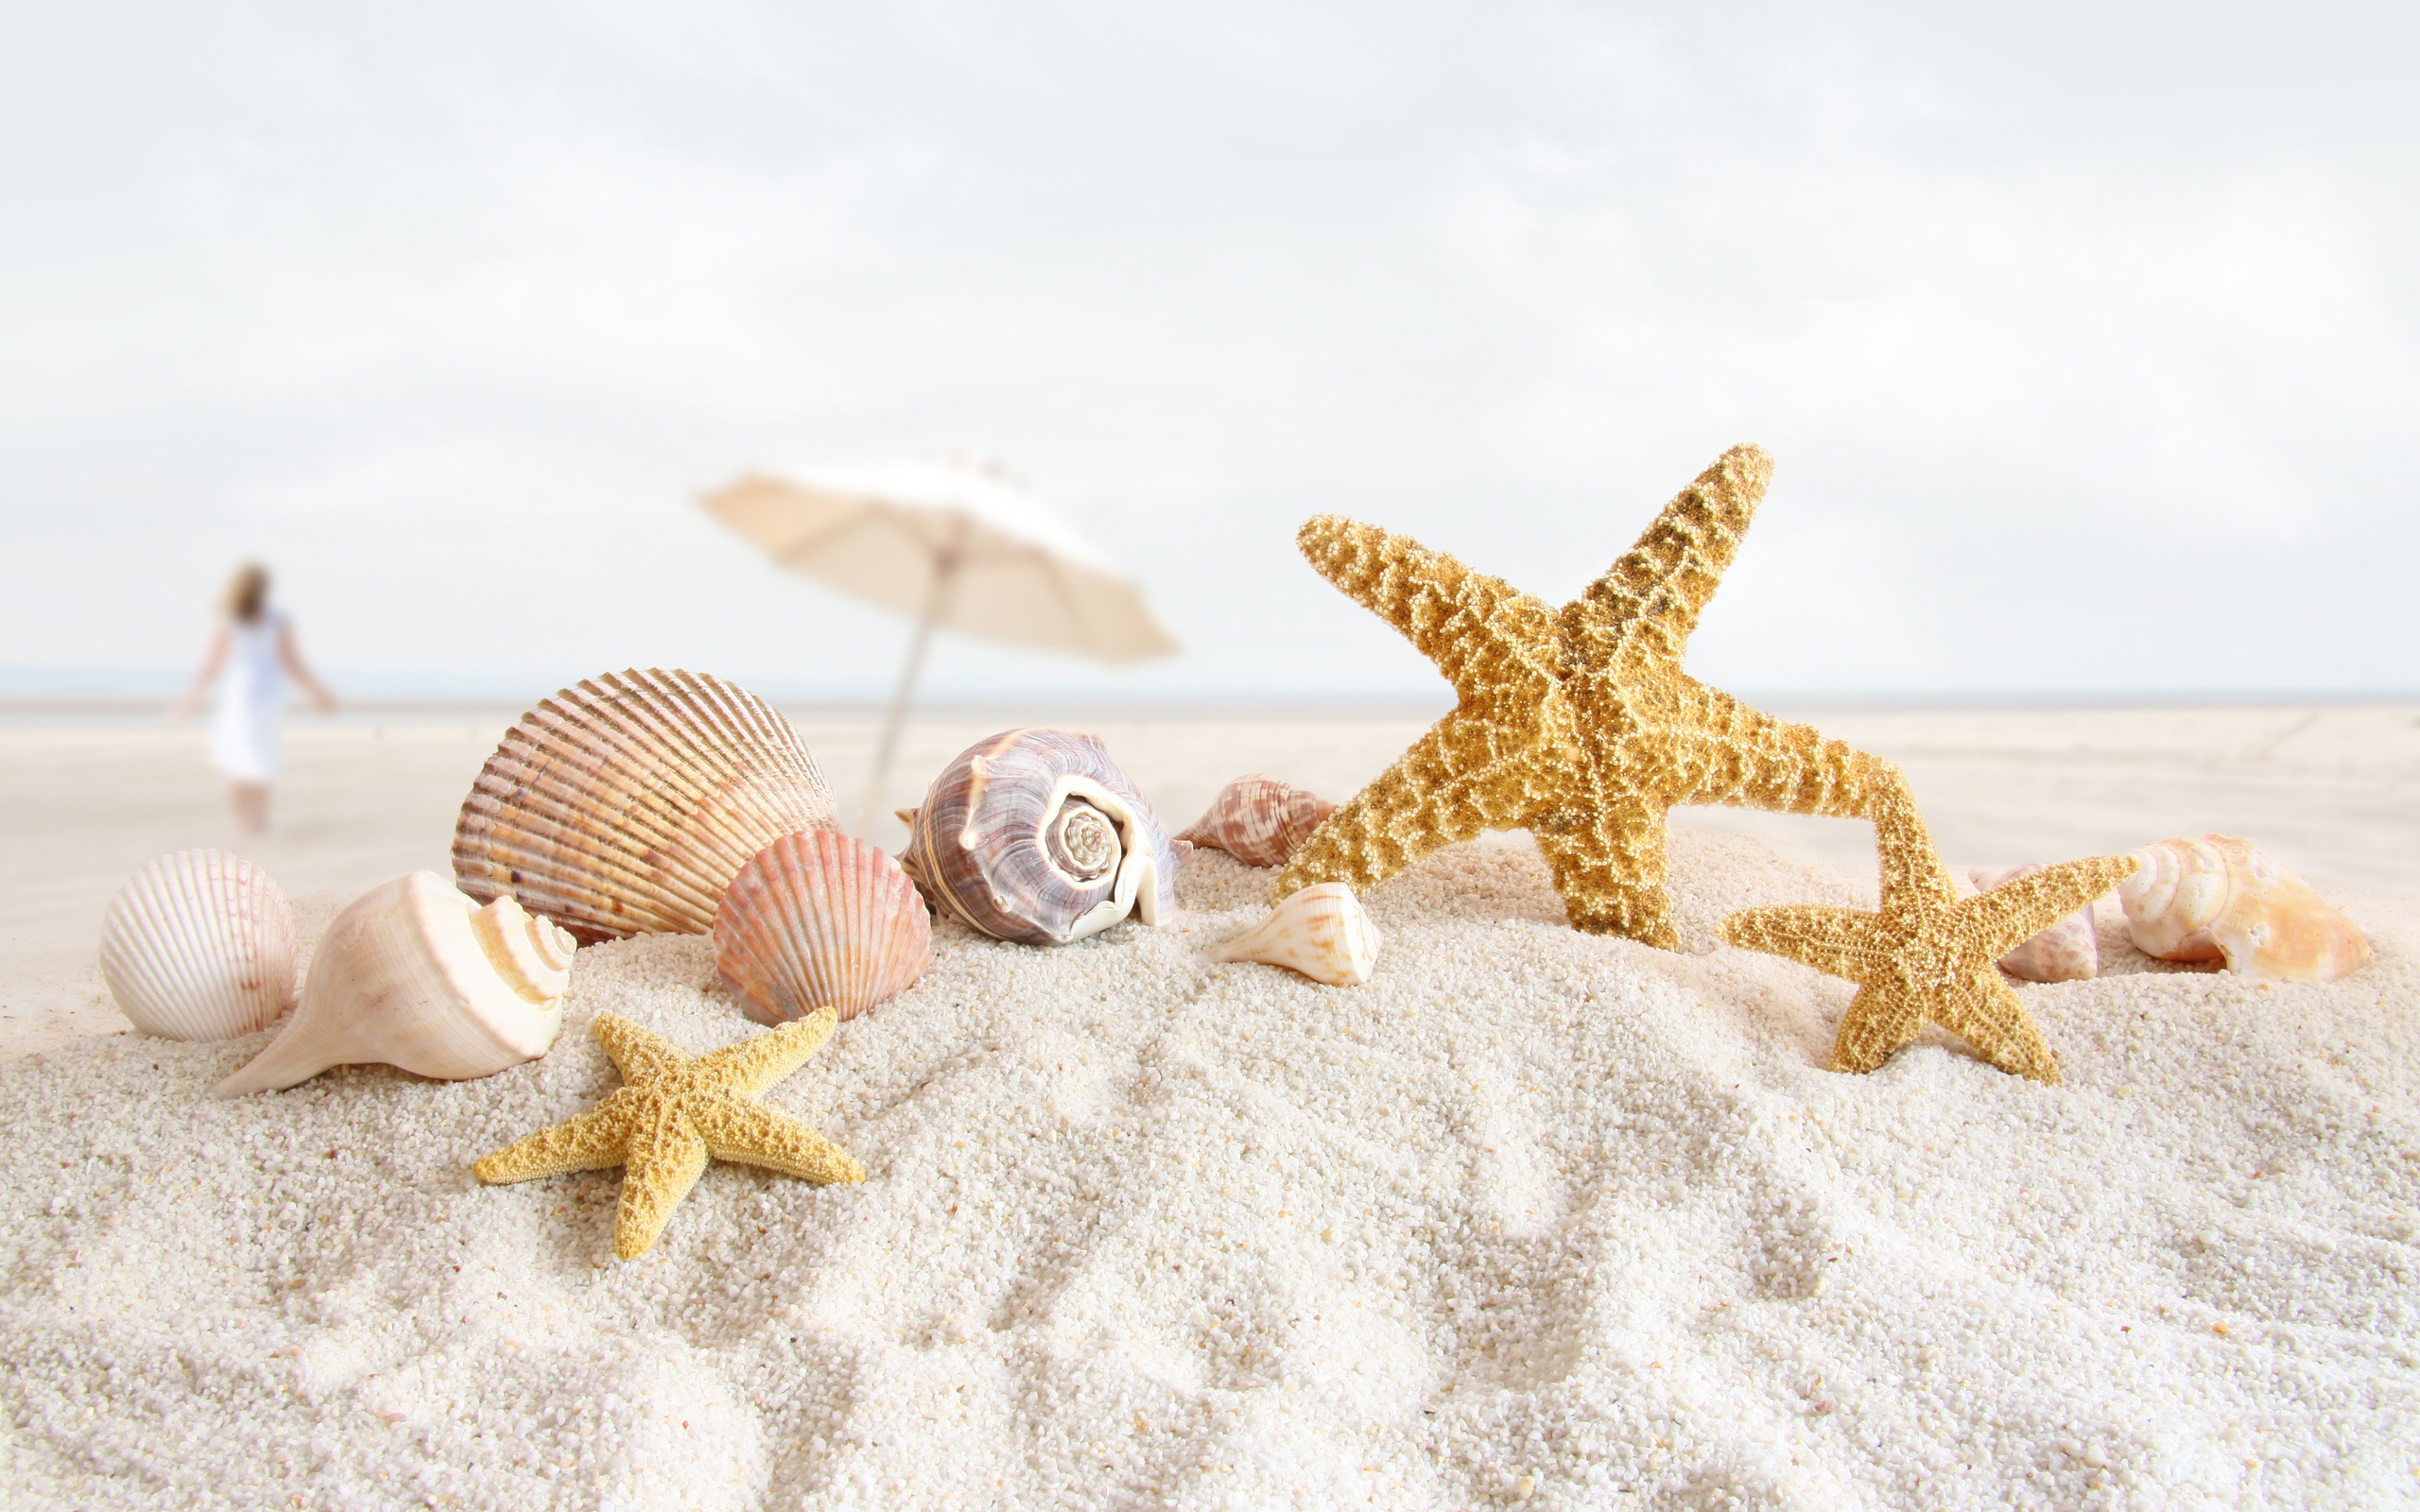 Seashells and Starfish for 2560 x 1600 widescreen resolution